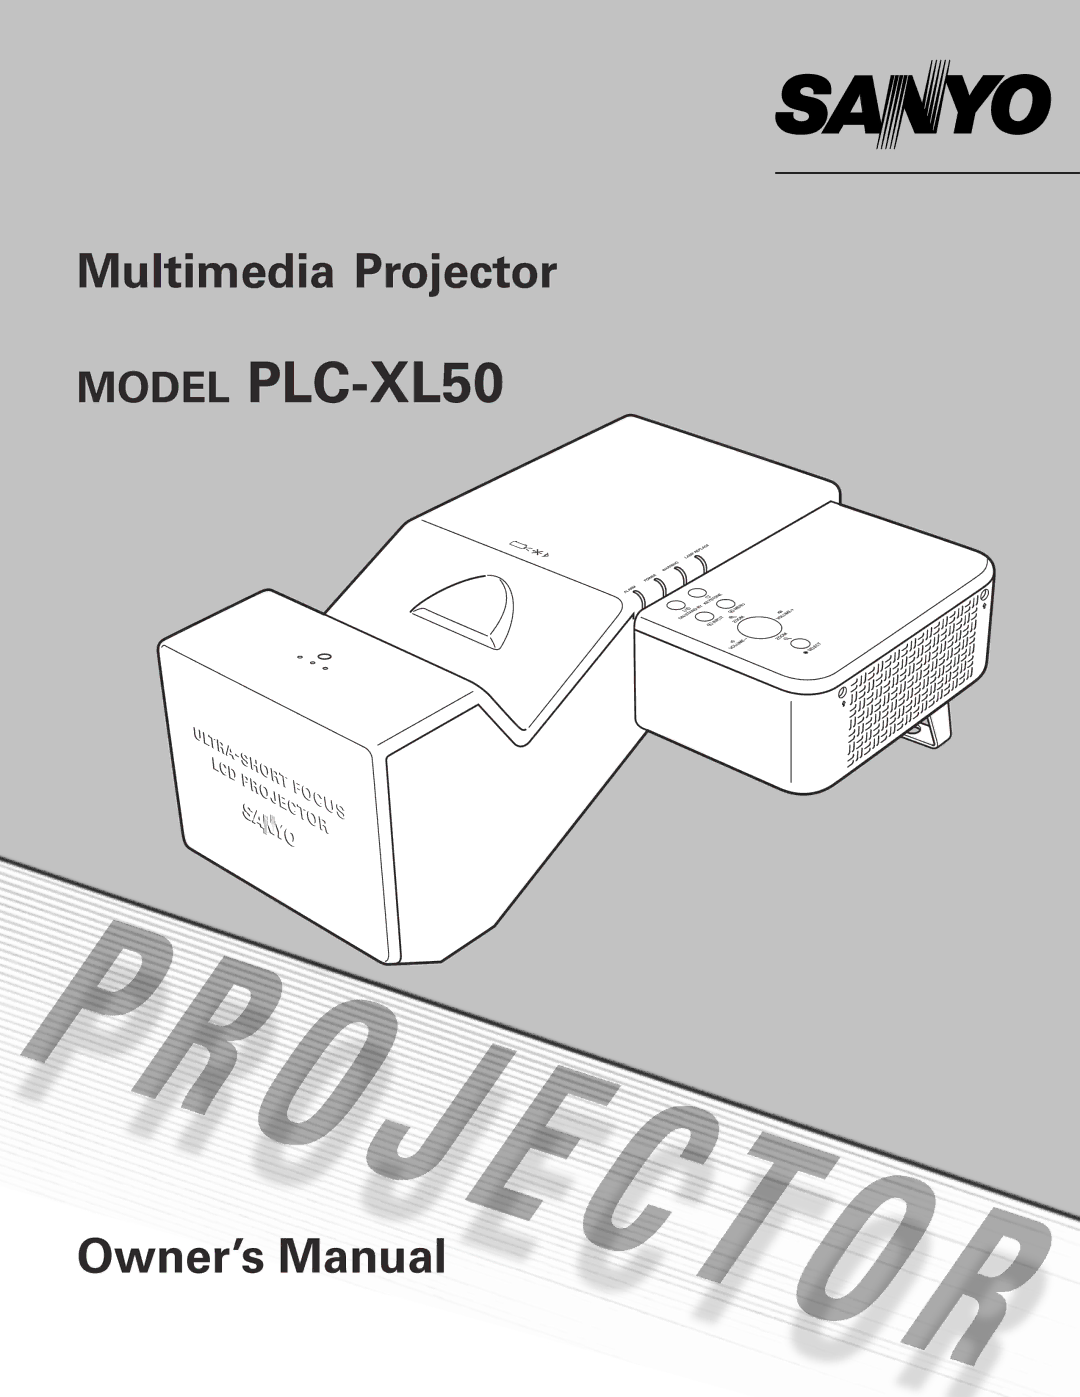 Sanyo owner manual Model PLC-XL50 